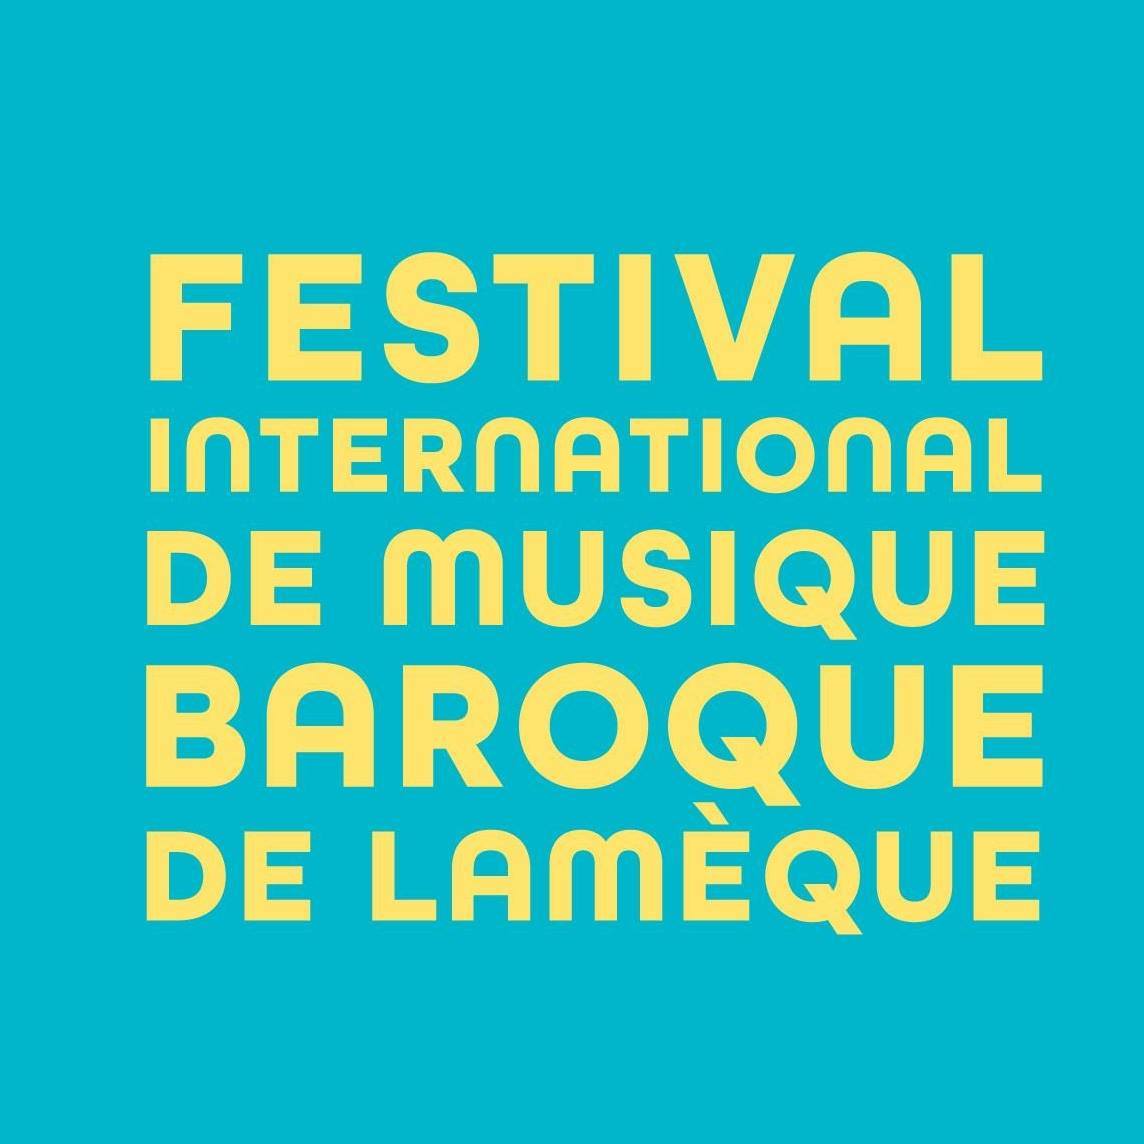 Festival international de musique baroque de Lamèque Image